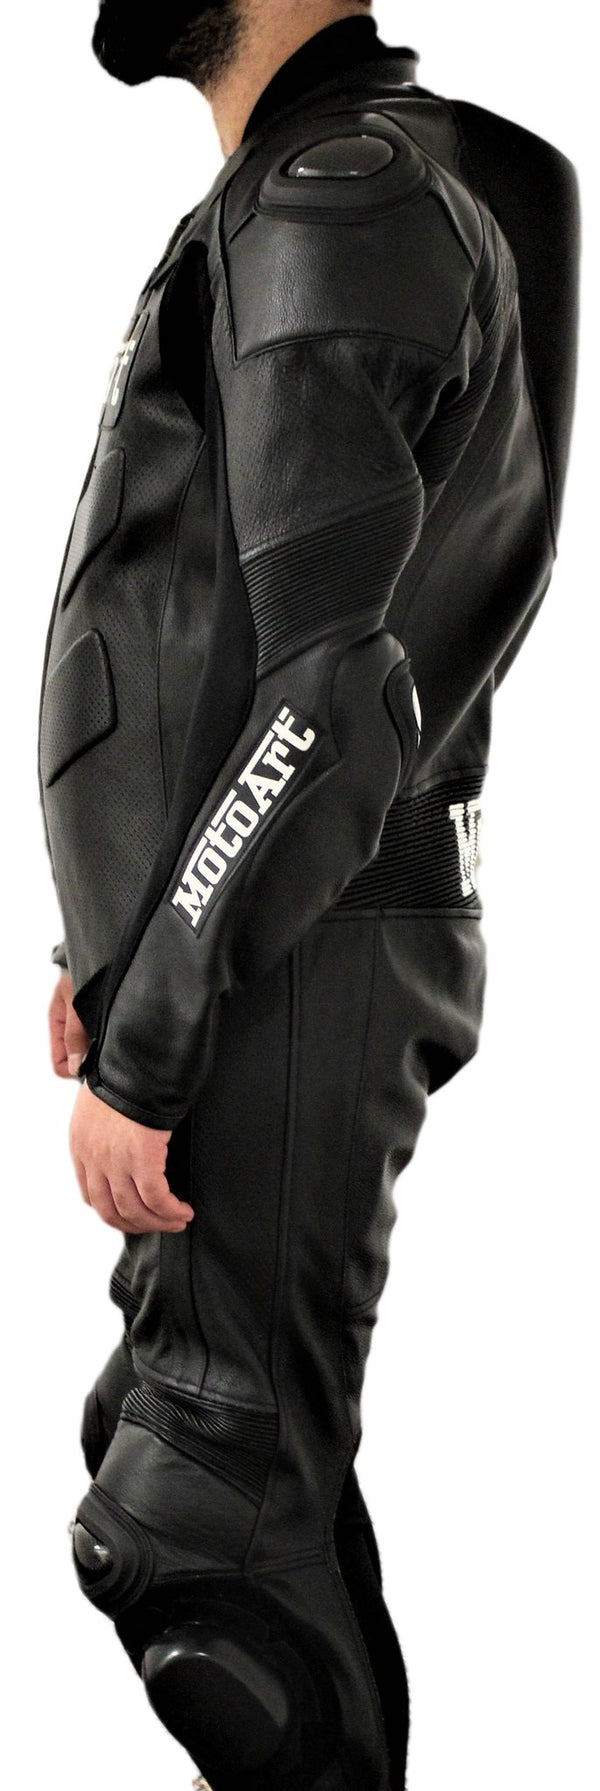 MotoArt Top Kevlar Black Motorcycle Leather Racing Suit One Piece - MotoArt Leather